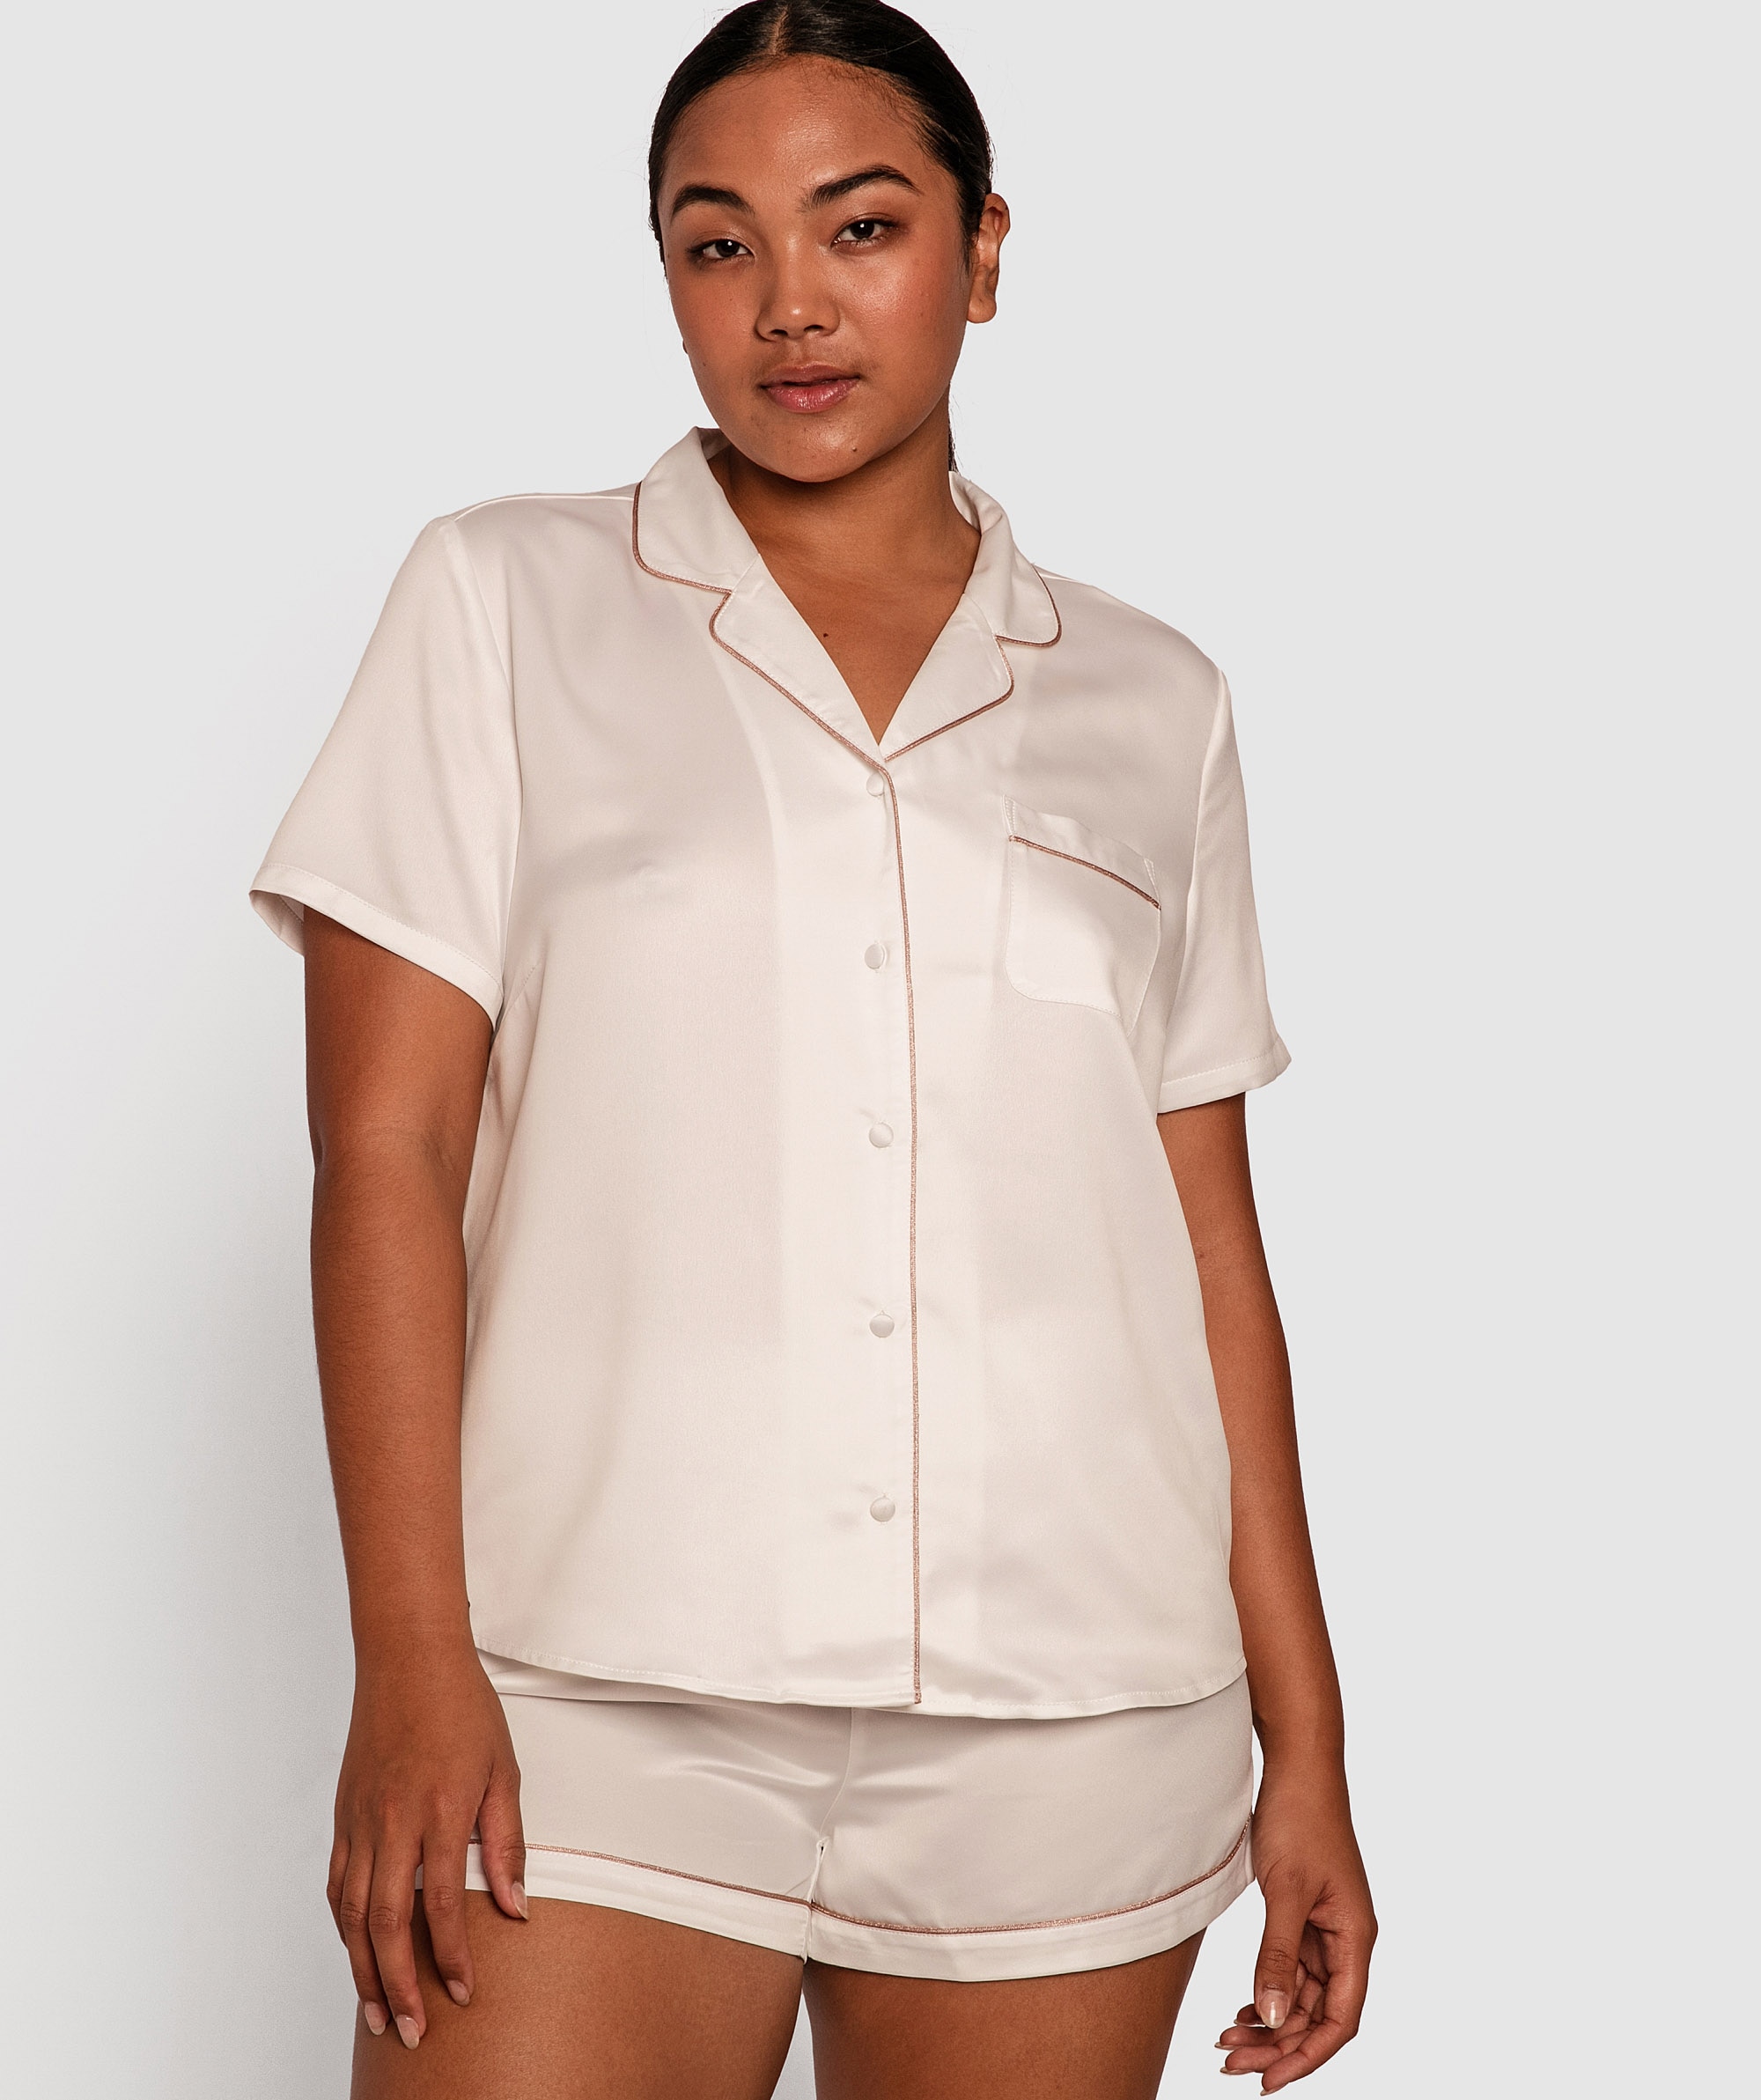 Vera Short Sleeve Top - White